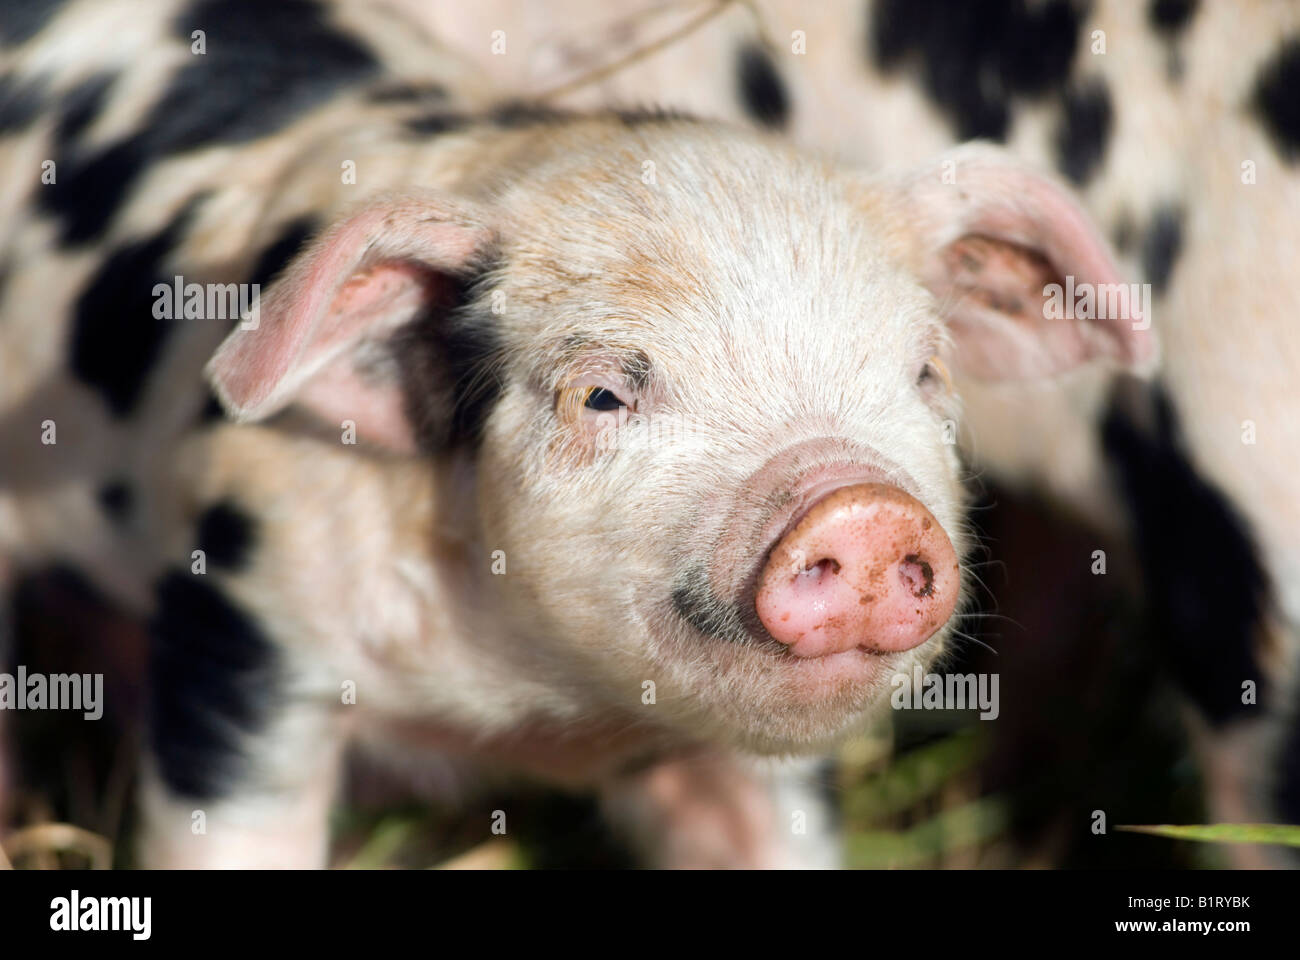 Piglet (Sus scrofa domestica), on an organic farm Stock Photo